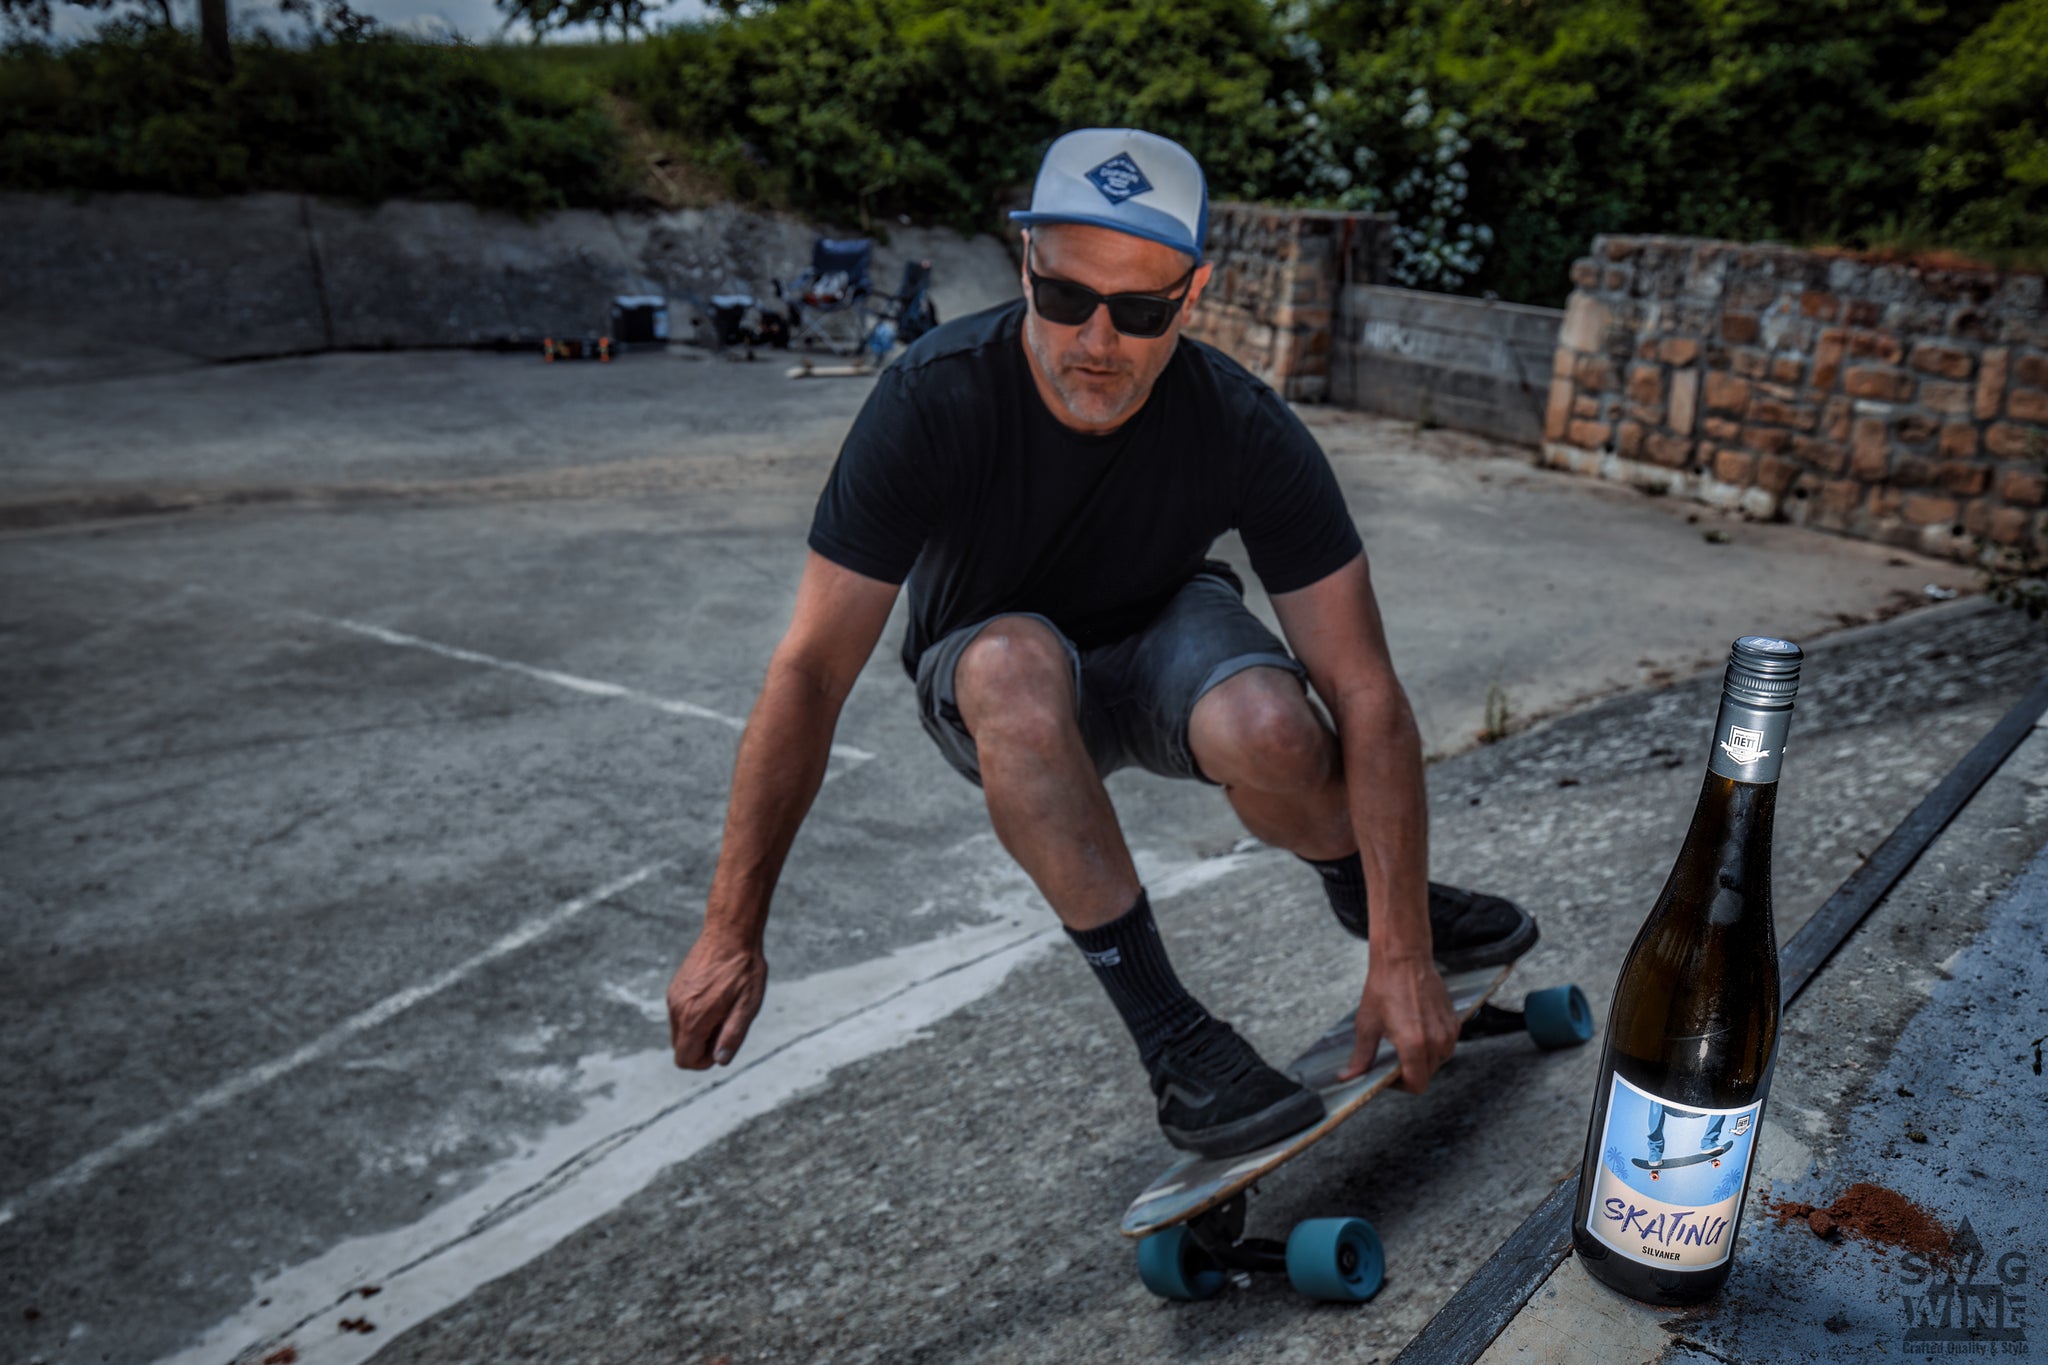 Skating Silvaner Sylvaner Apfel Bergdoldt Reiff Nett Pfalz Swagwine Wein Wine Board Skateboard Palmen 360